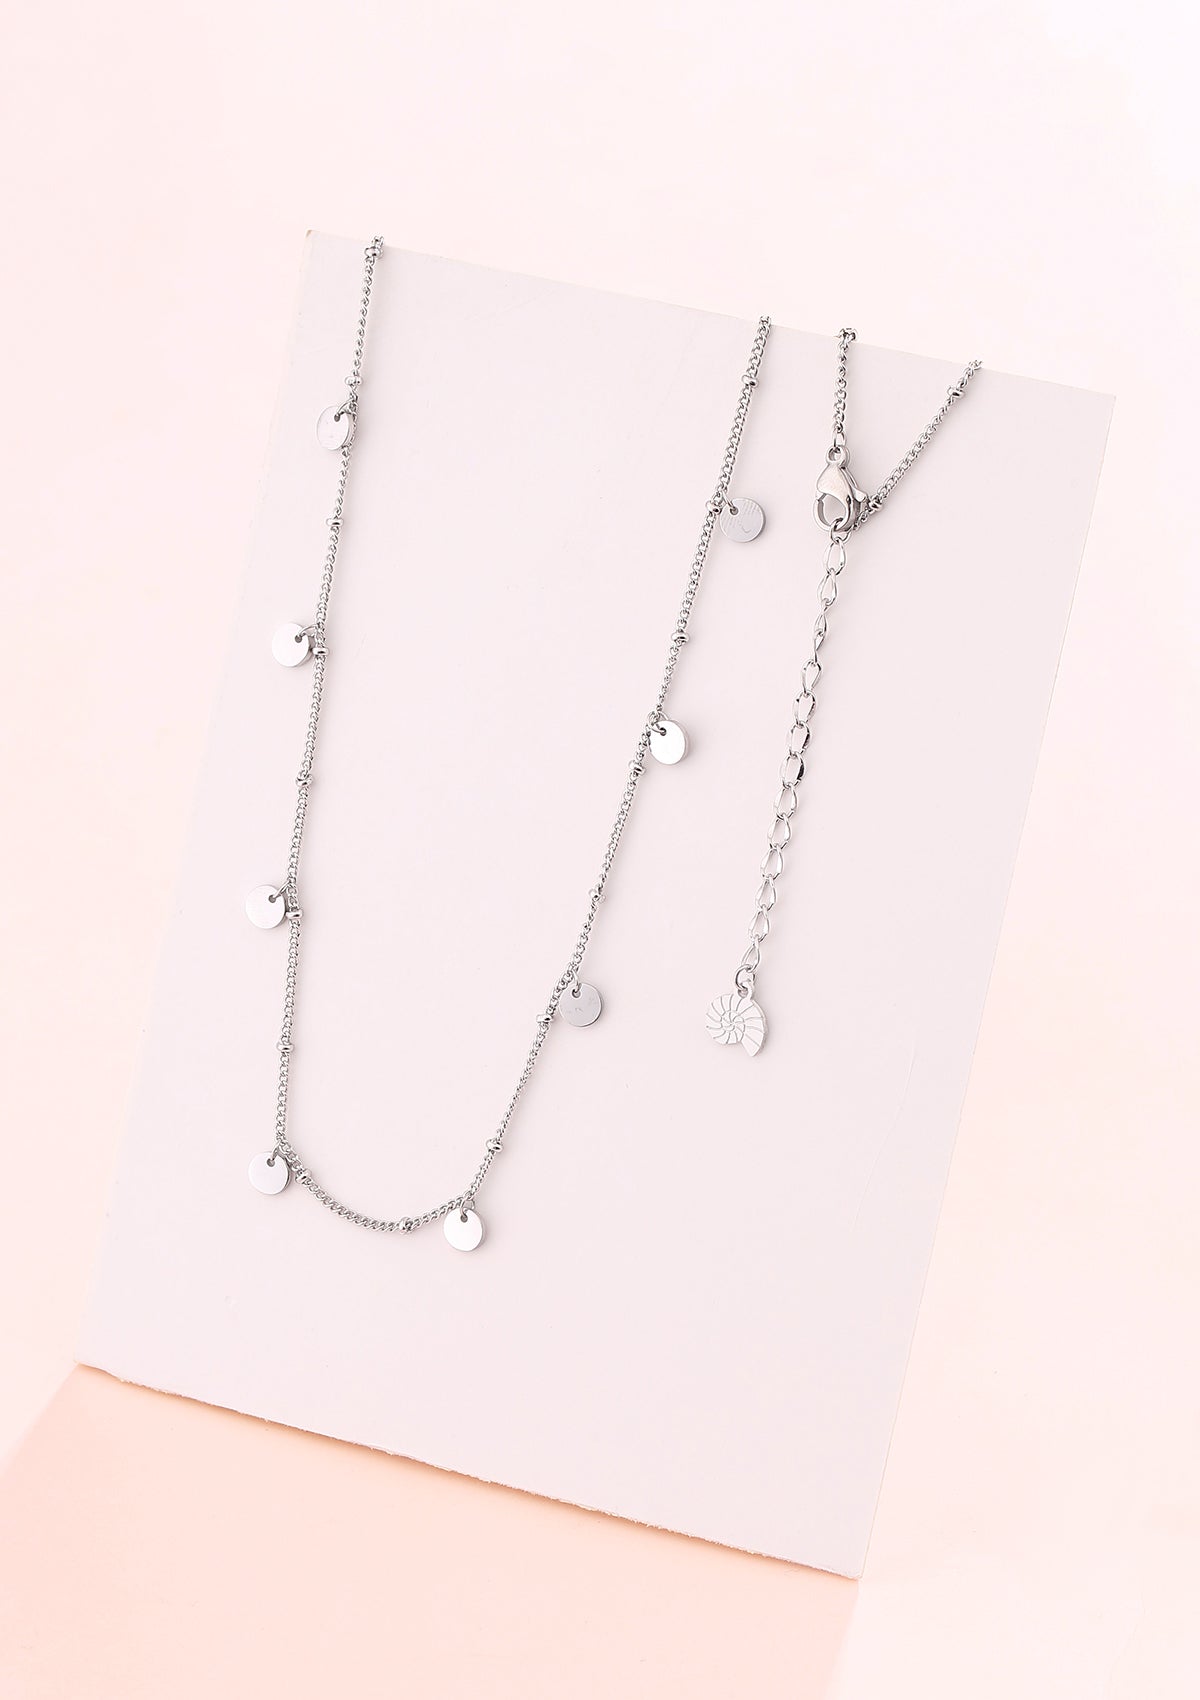 Circles Bobble Chain Necklace Silver